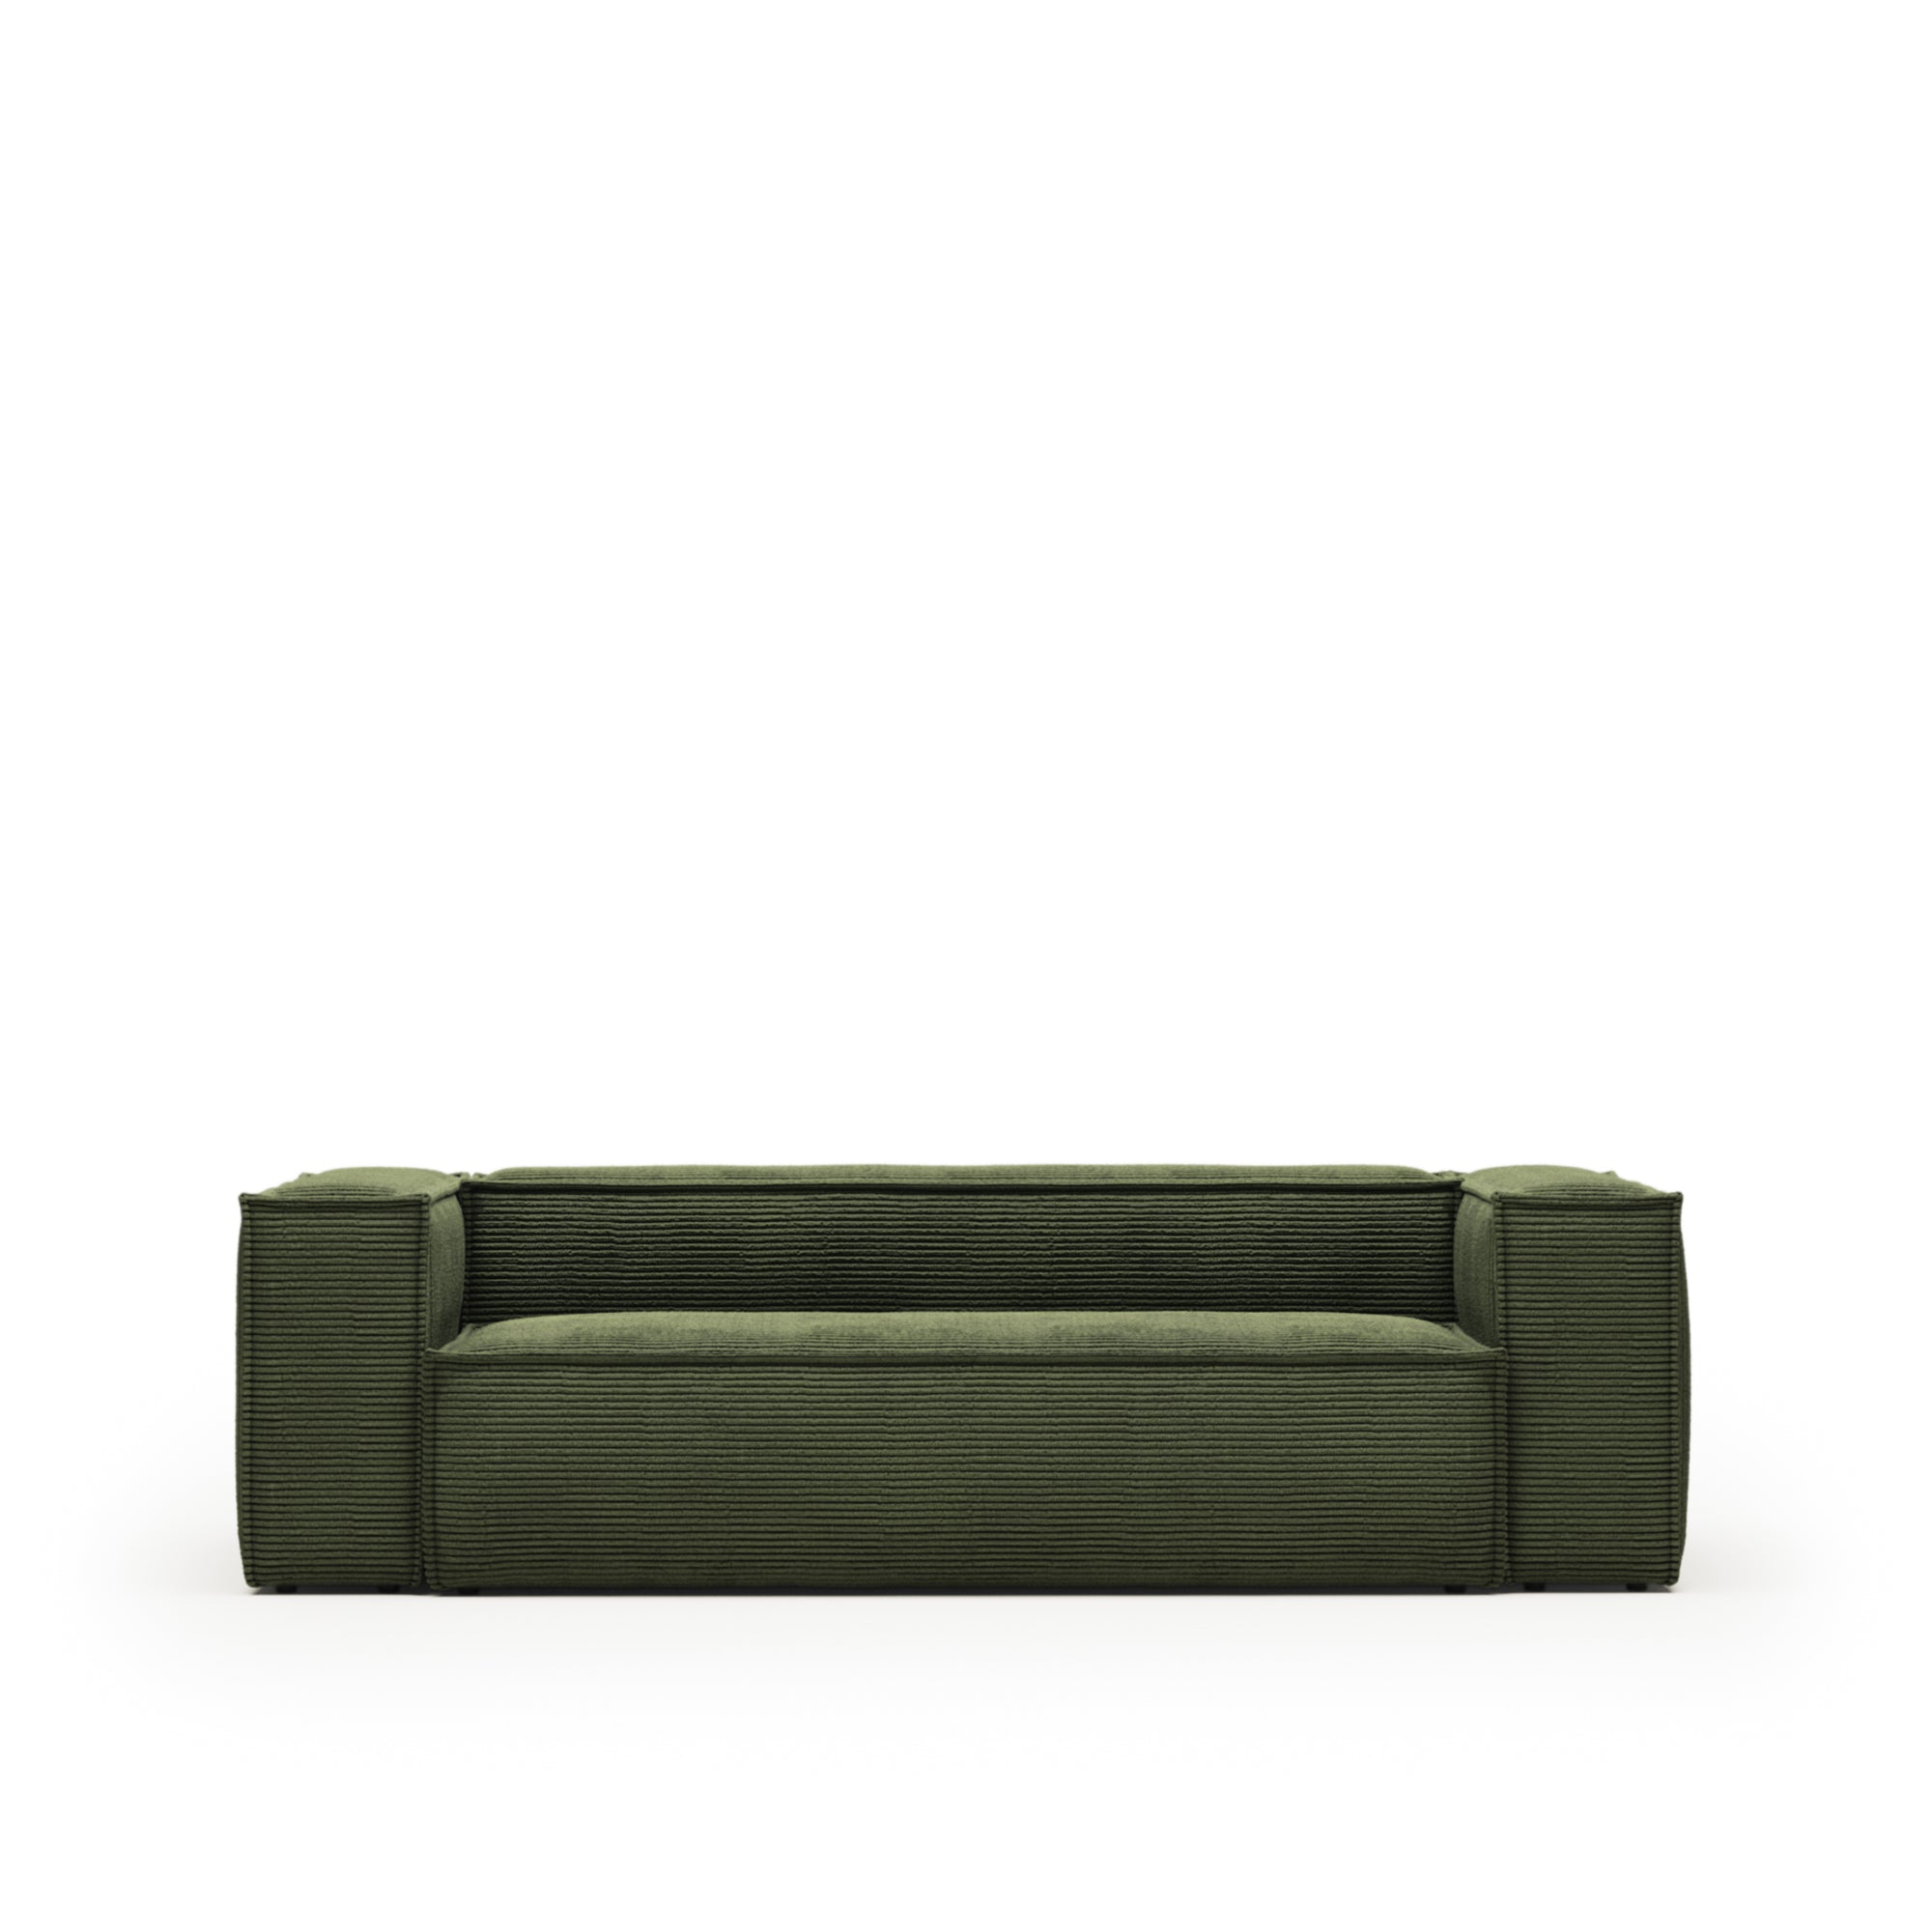 Blok 3 seater sofa in green wide seam corduroy, 240 cm